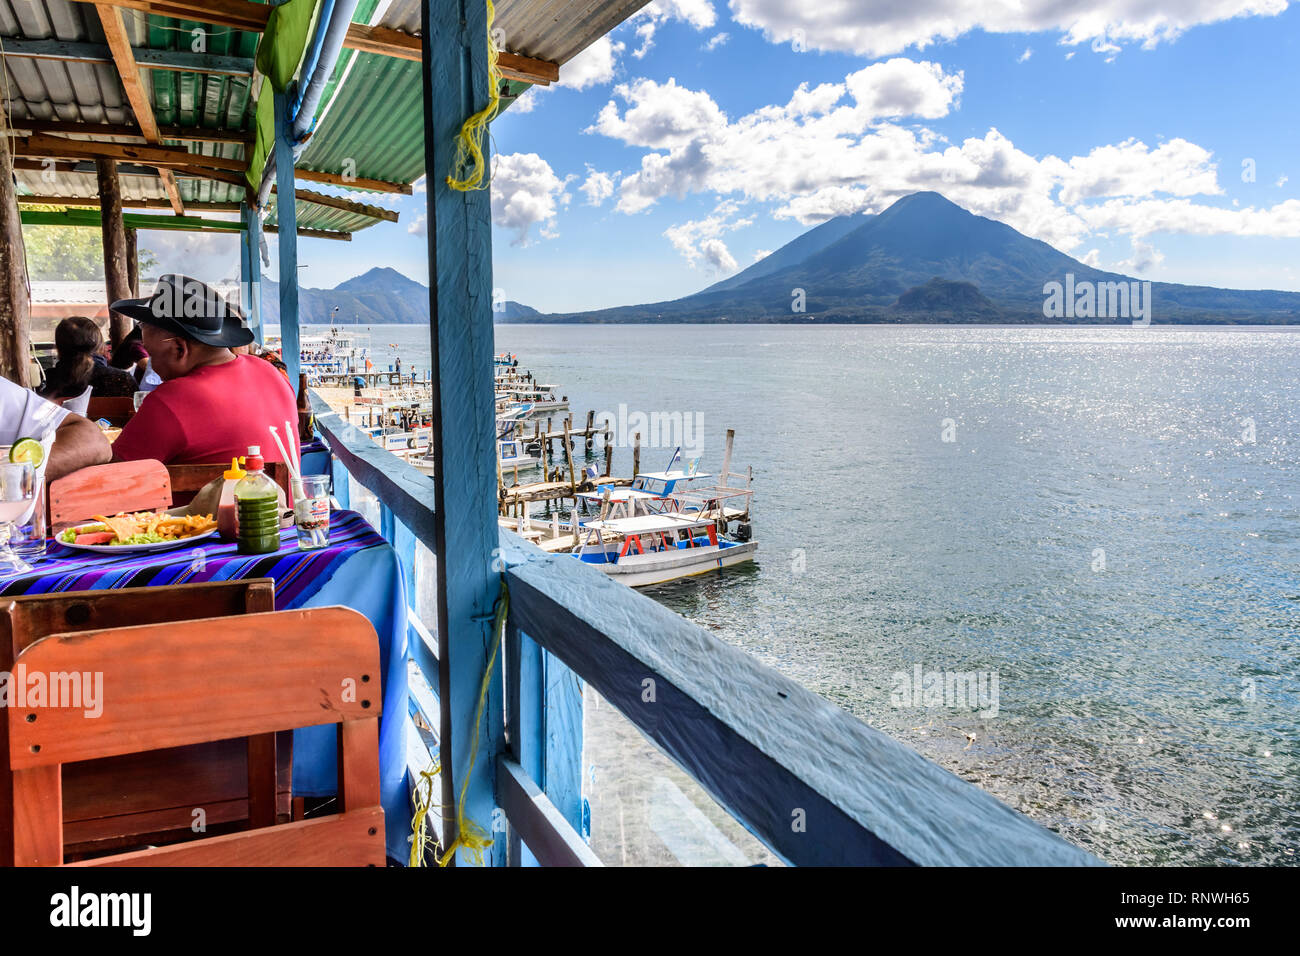 Panajachel, Lake Atitlan, Guatemala - December 25, 2018: Lakeside restaurant on Christmas Day in Panajachel with Atitlan & Toliman volcanoes behind. Stock Photo